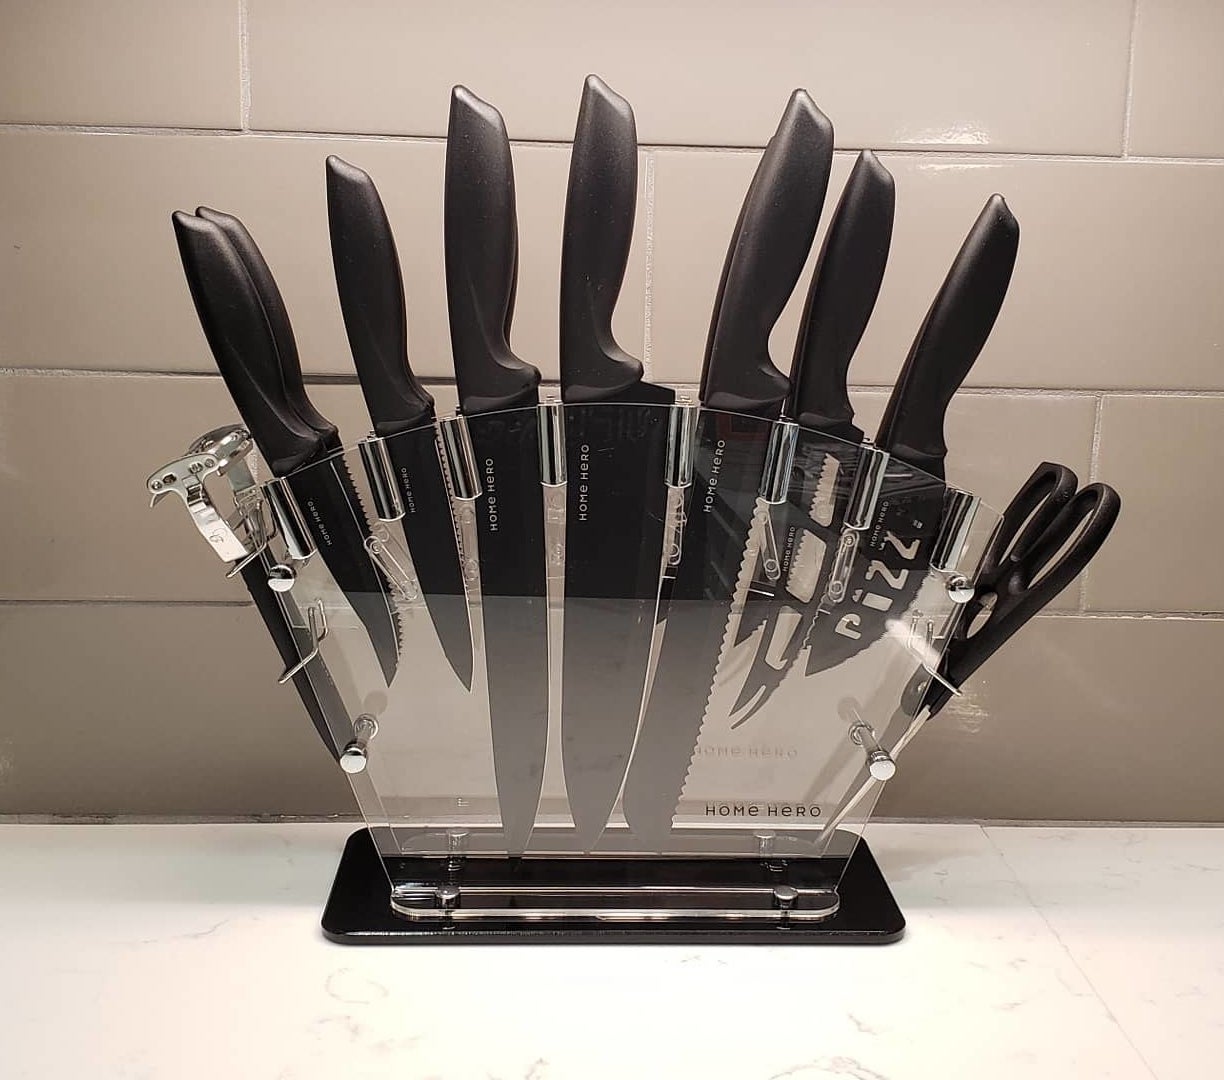 the set of black knives